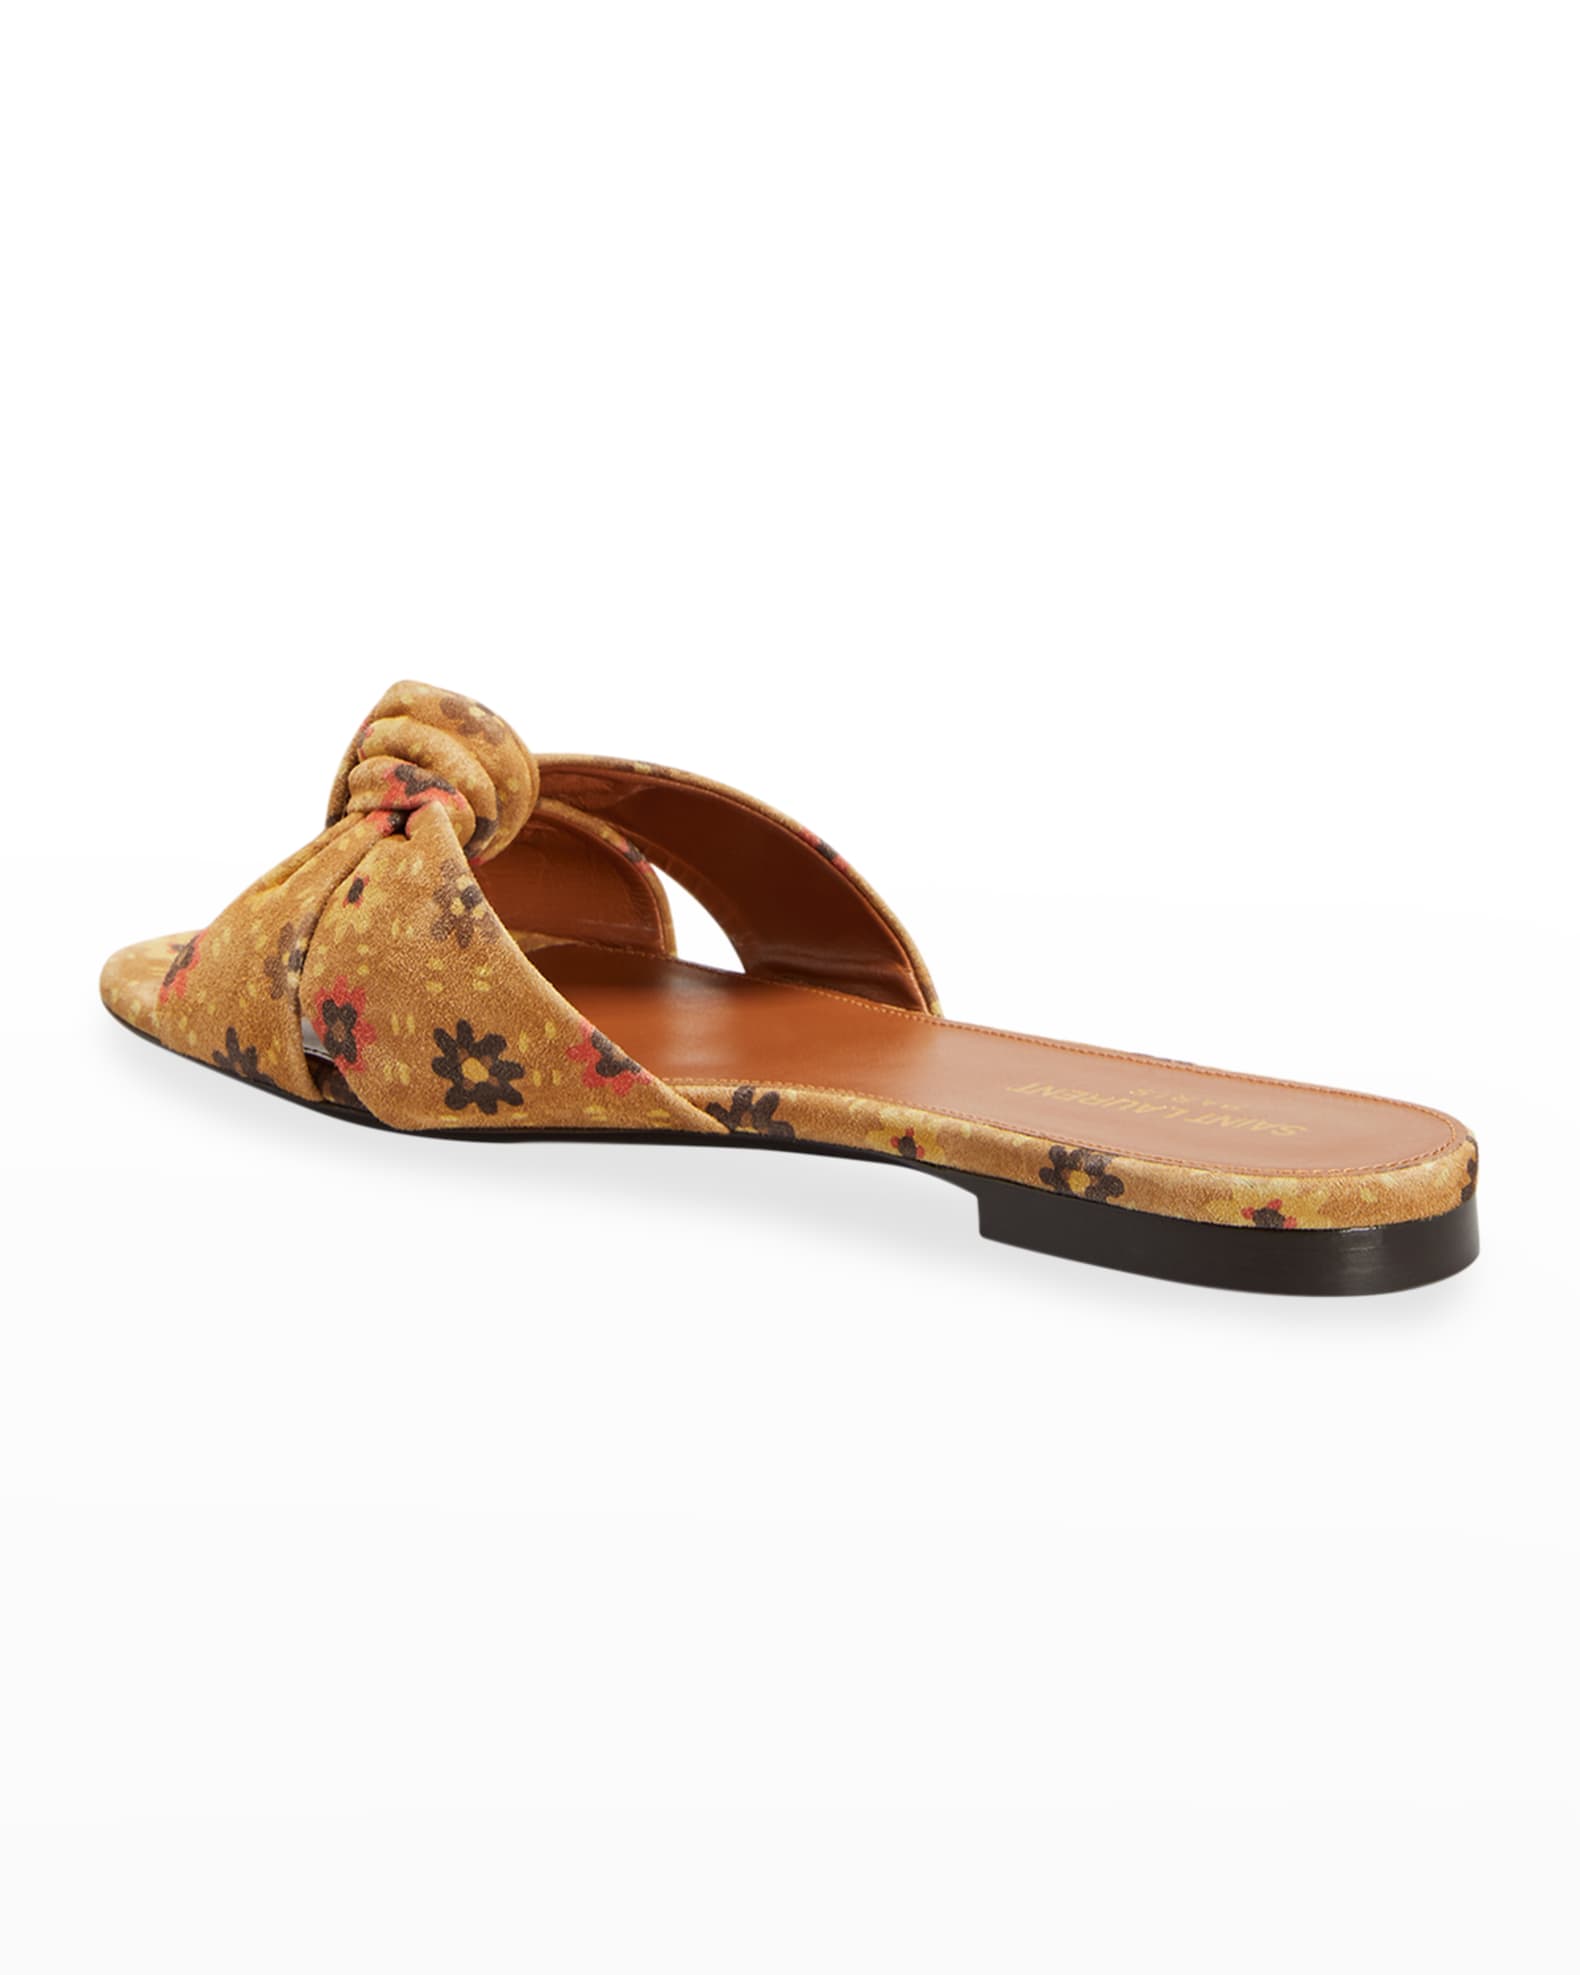 Saint Laurent Bianca Floral Suede Slide Sandals | Neiman Marcus